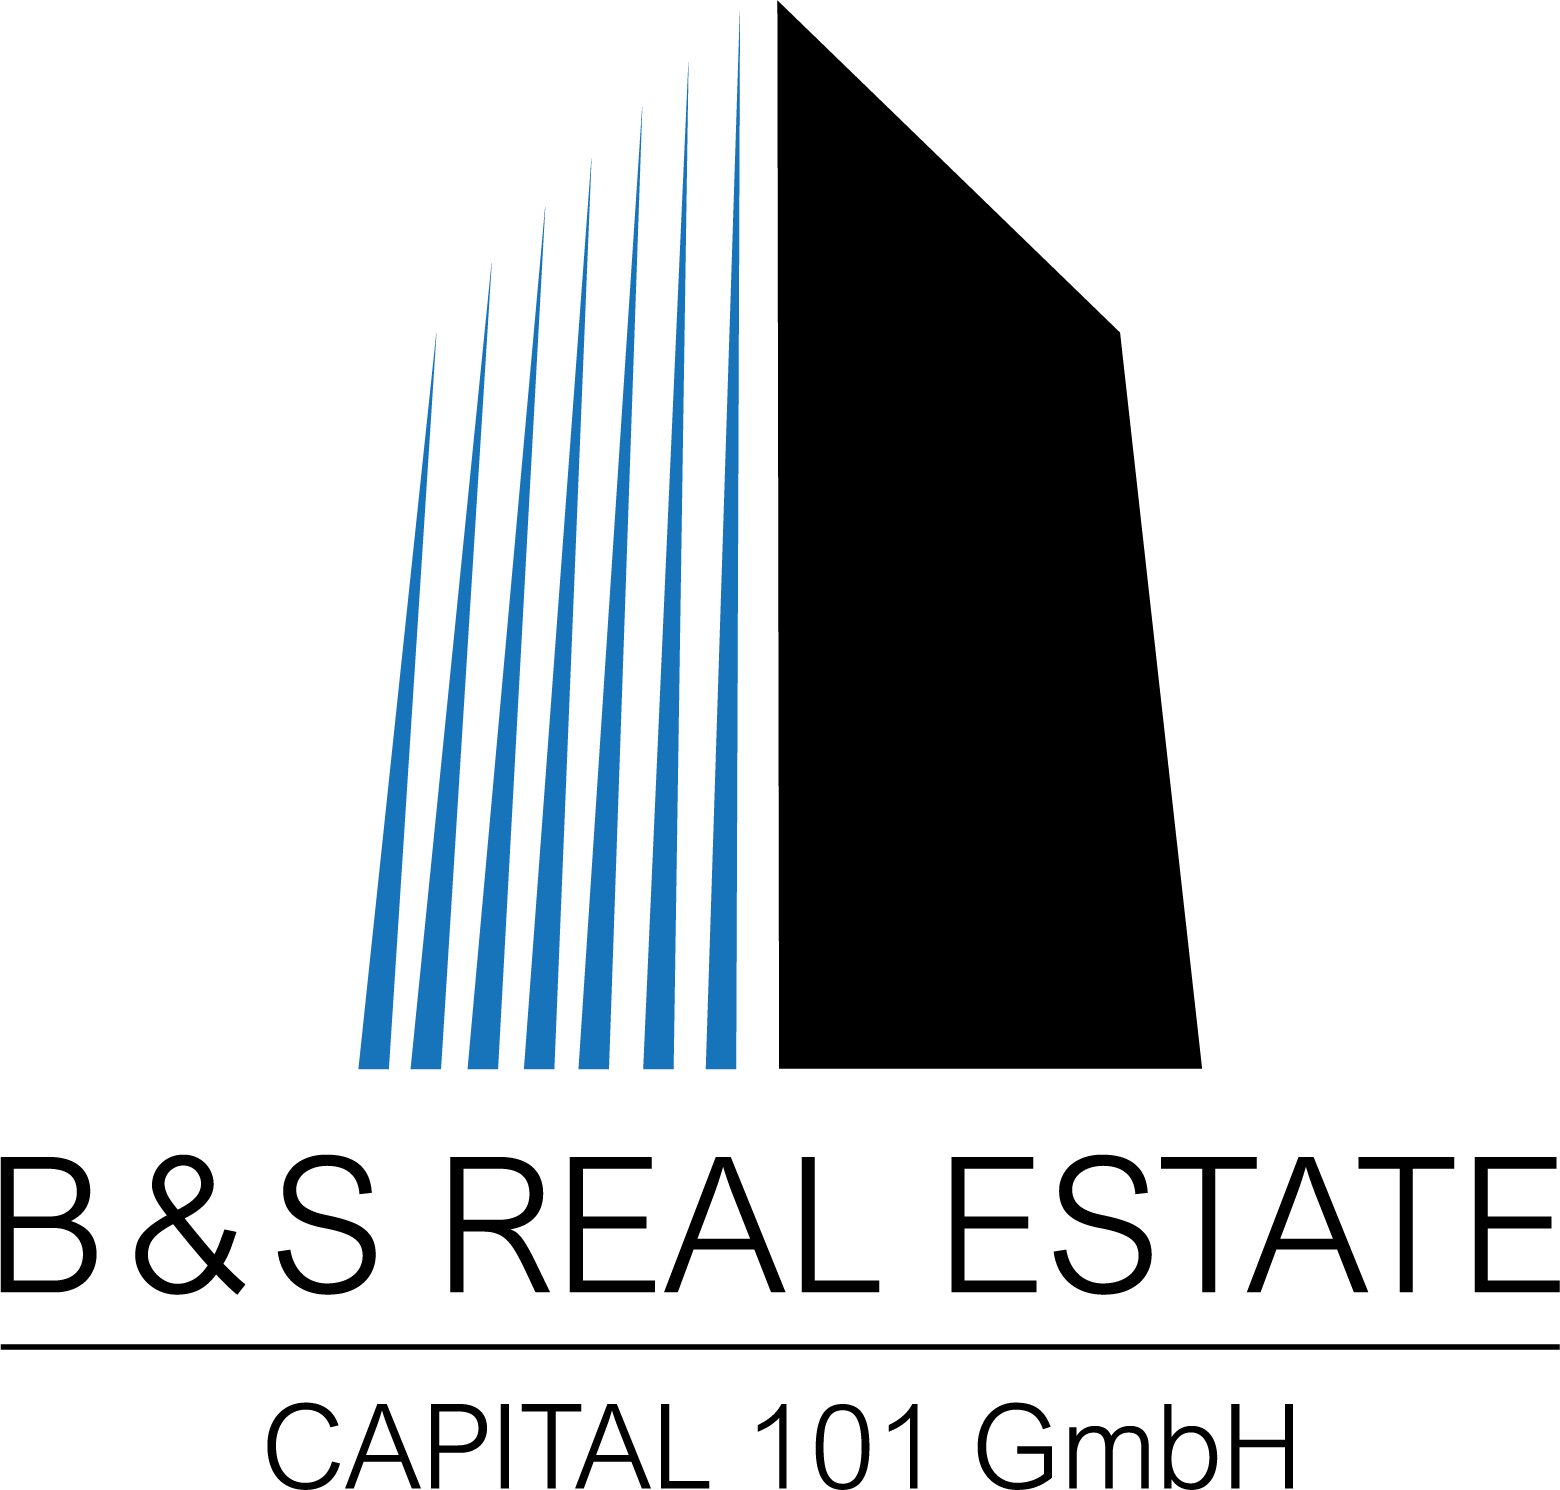 B&S REAL ESTATE CAPITAL 101 GmbH Logo